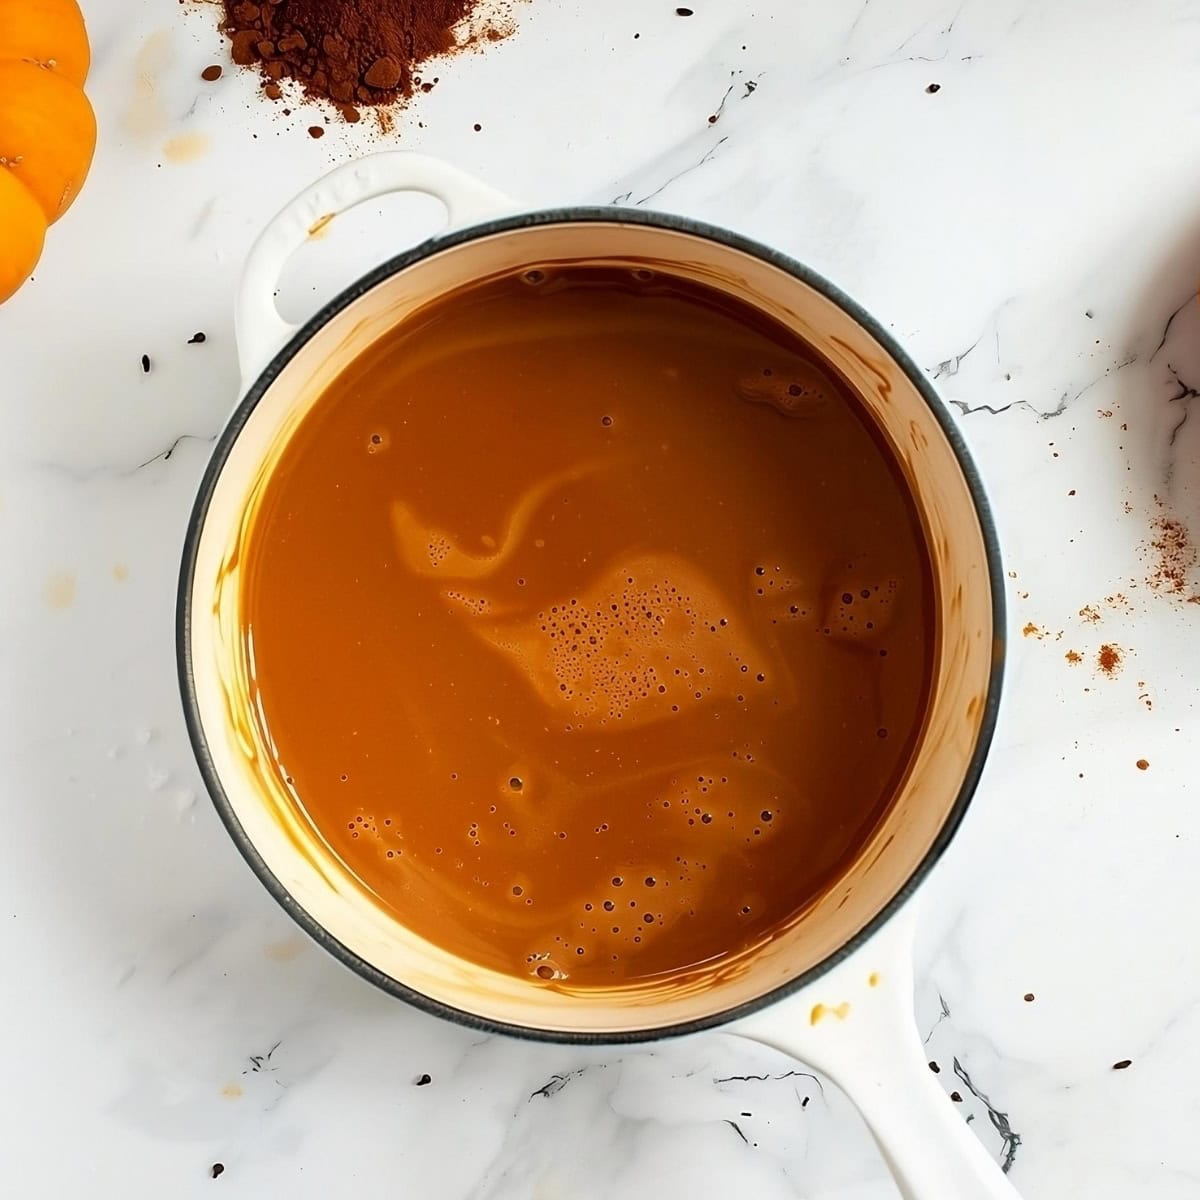 Pumpkin Spice Hot Chocolate in a saucepan, top down view.